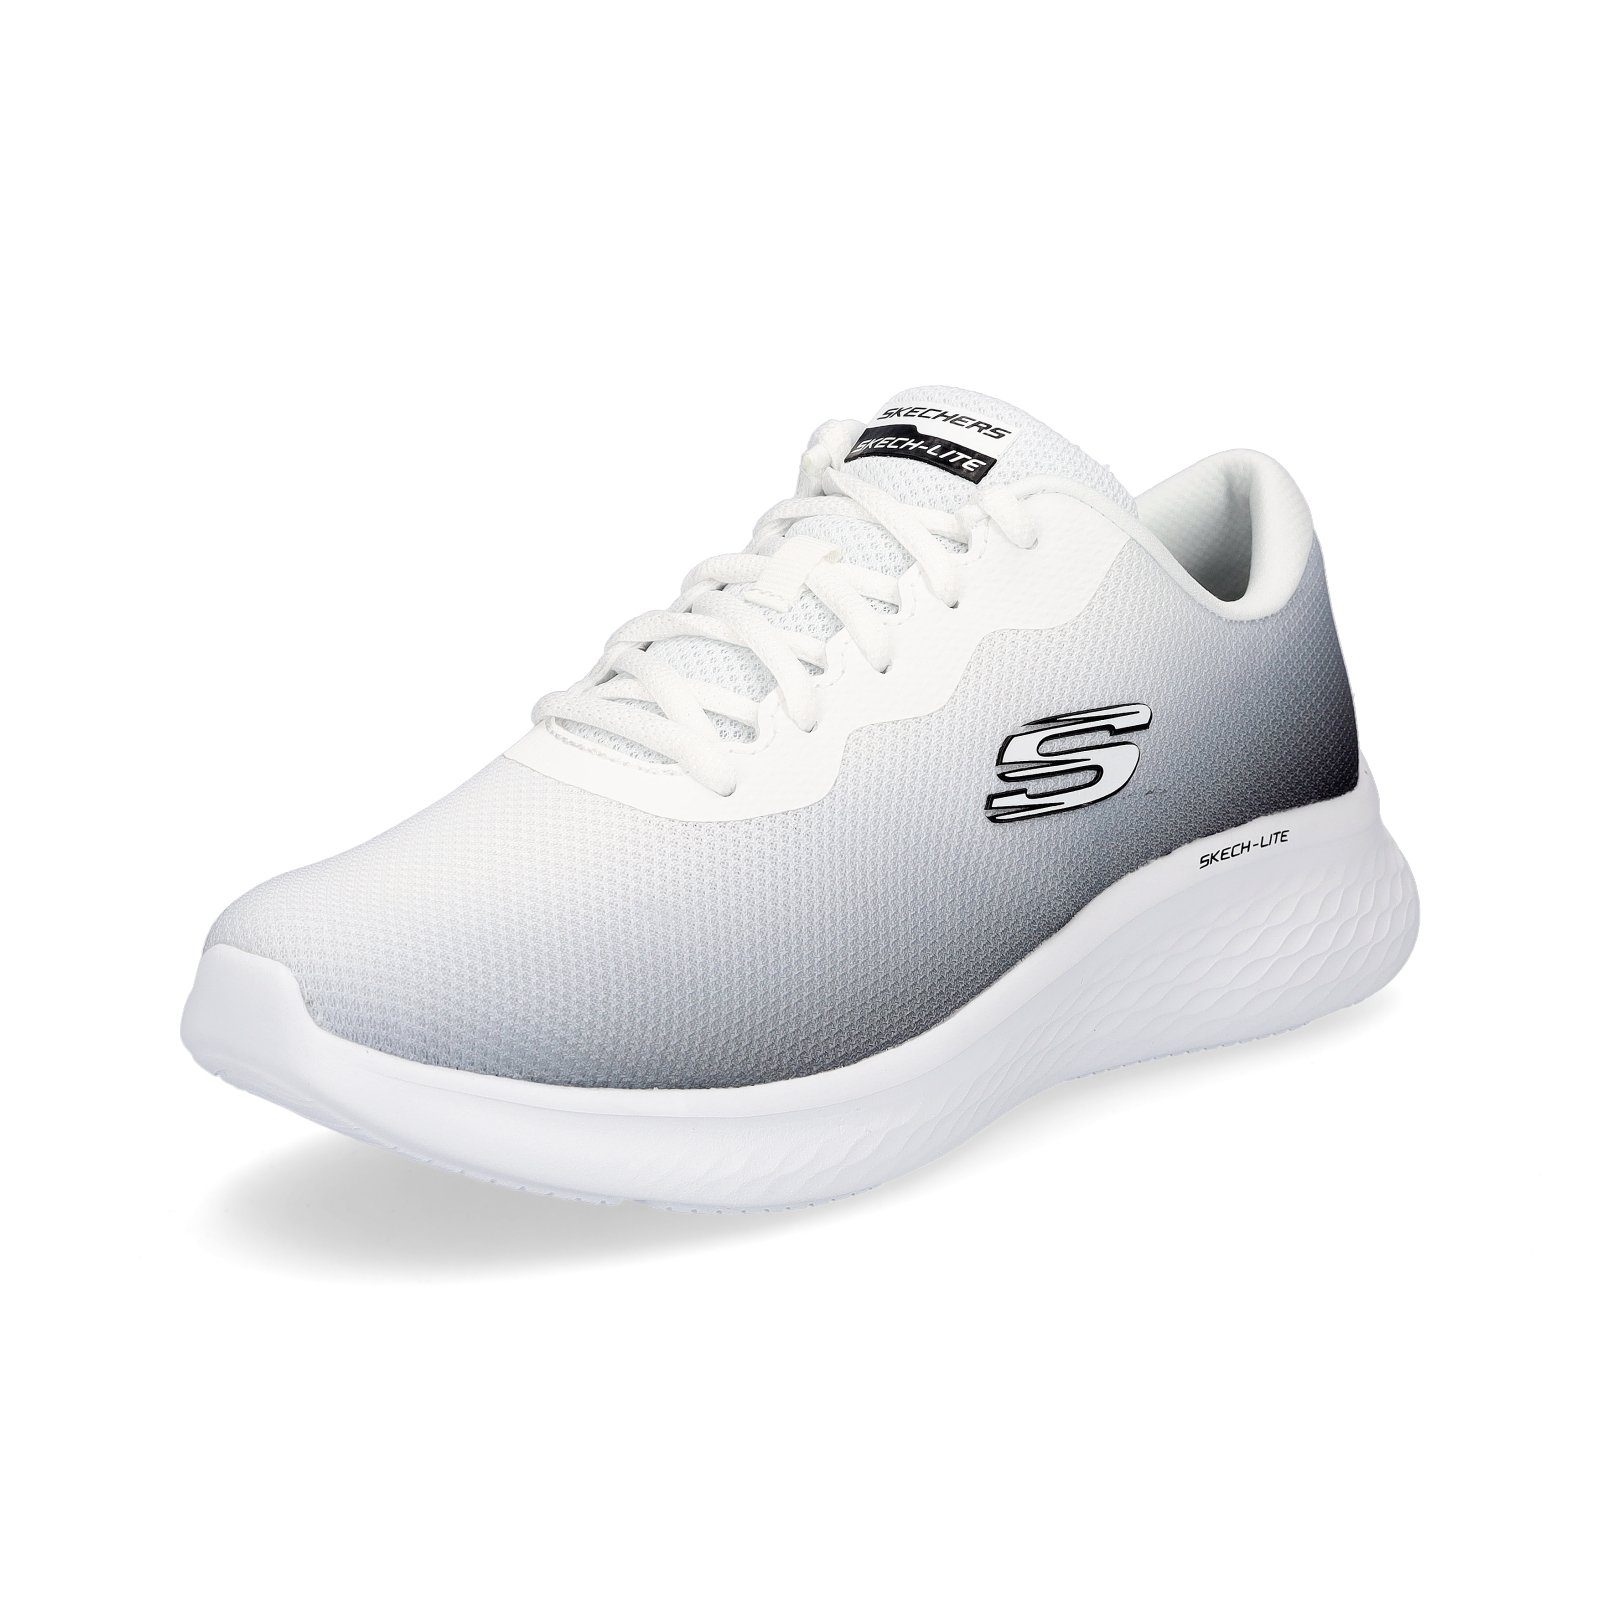 Skechers Skechers Damen Sneaker Skech-Lite Pro weiß schwarz faded Sneaker,  Skech-Lite Pro - Fade Out, Air-Cooled Memory Foam, maschinenwaschbar